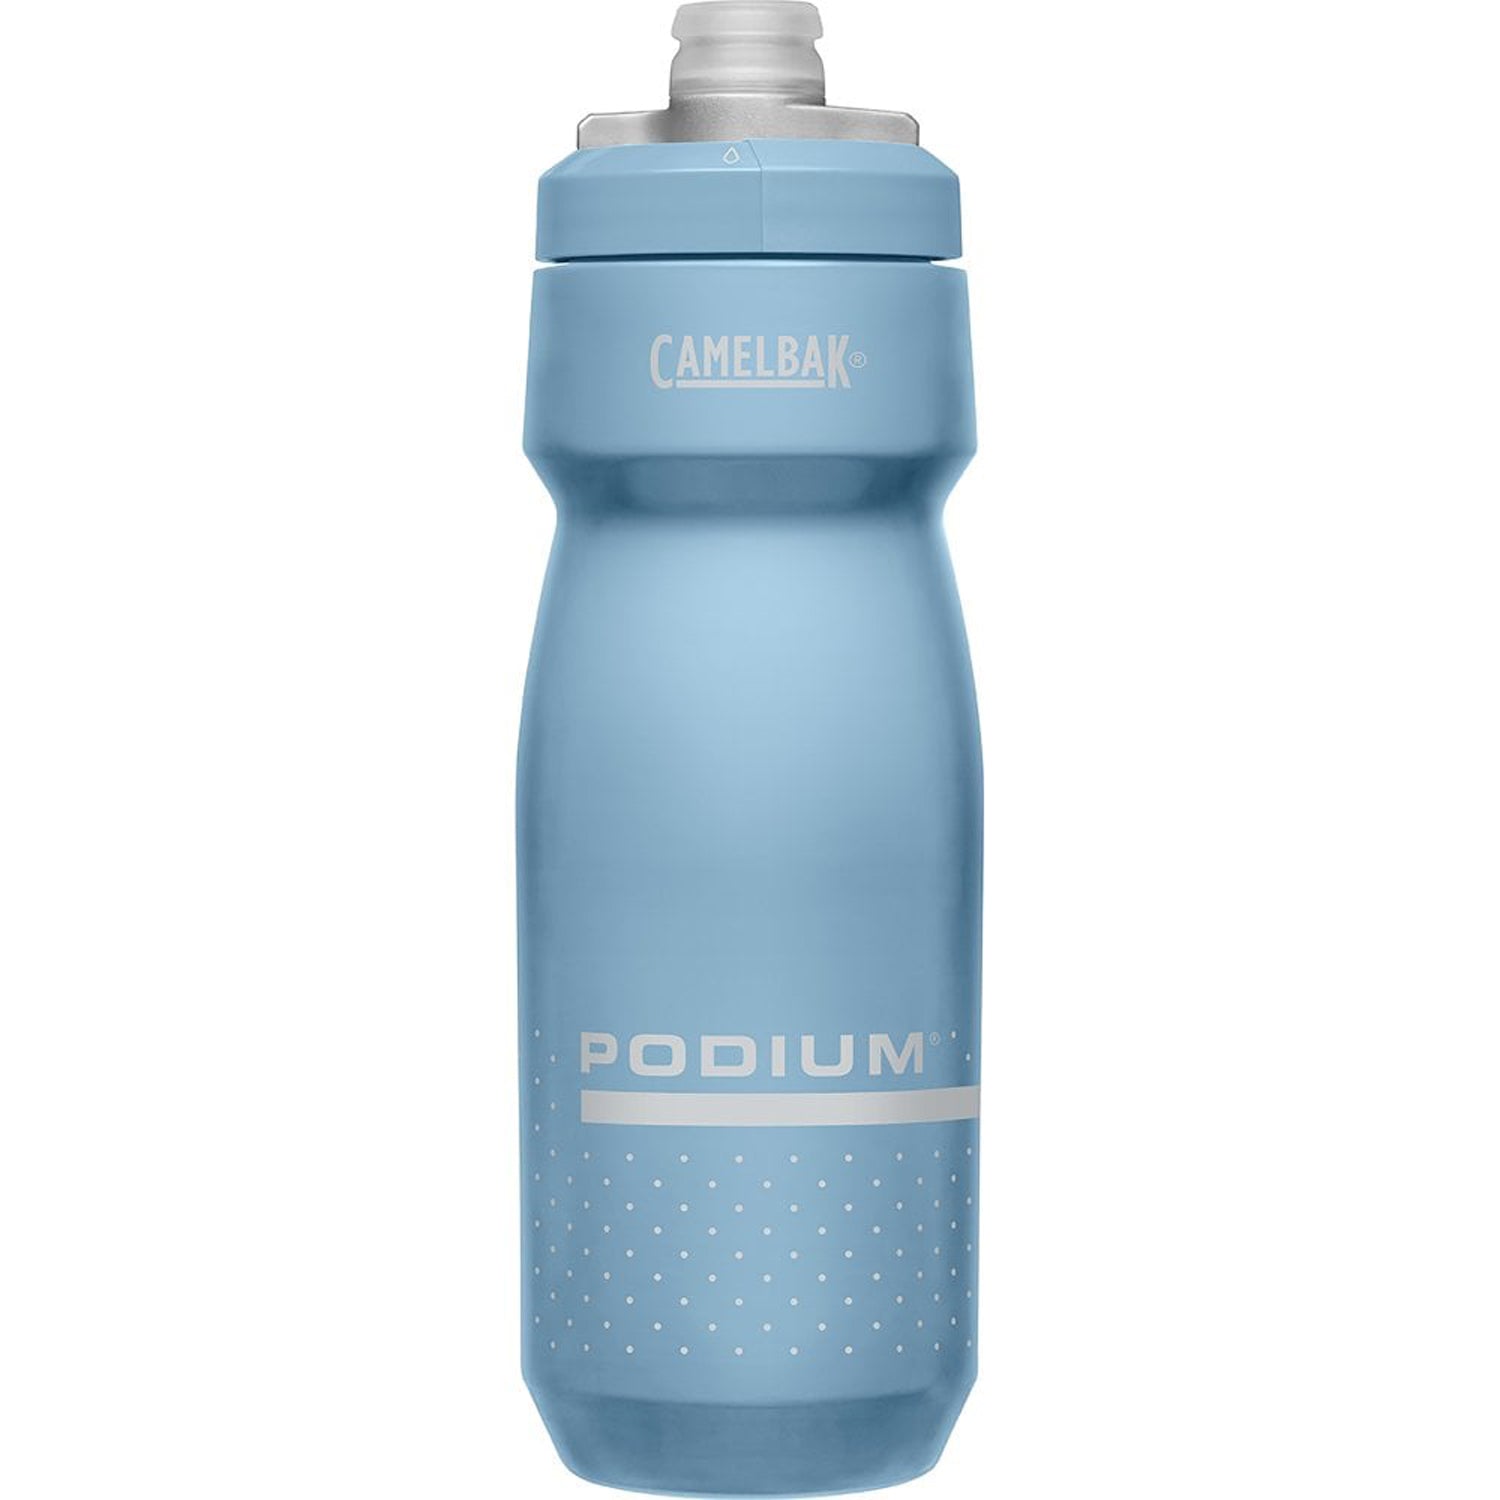 Camelbak Podium Bottle, Stone Blue - 24OZ/710 ML - Best Price online Prokicksports.com